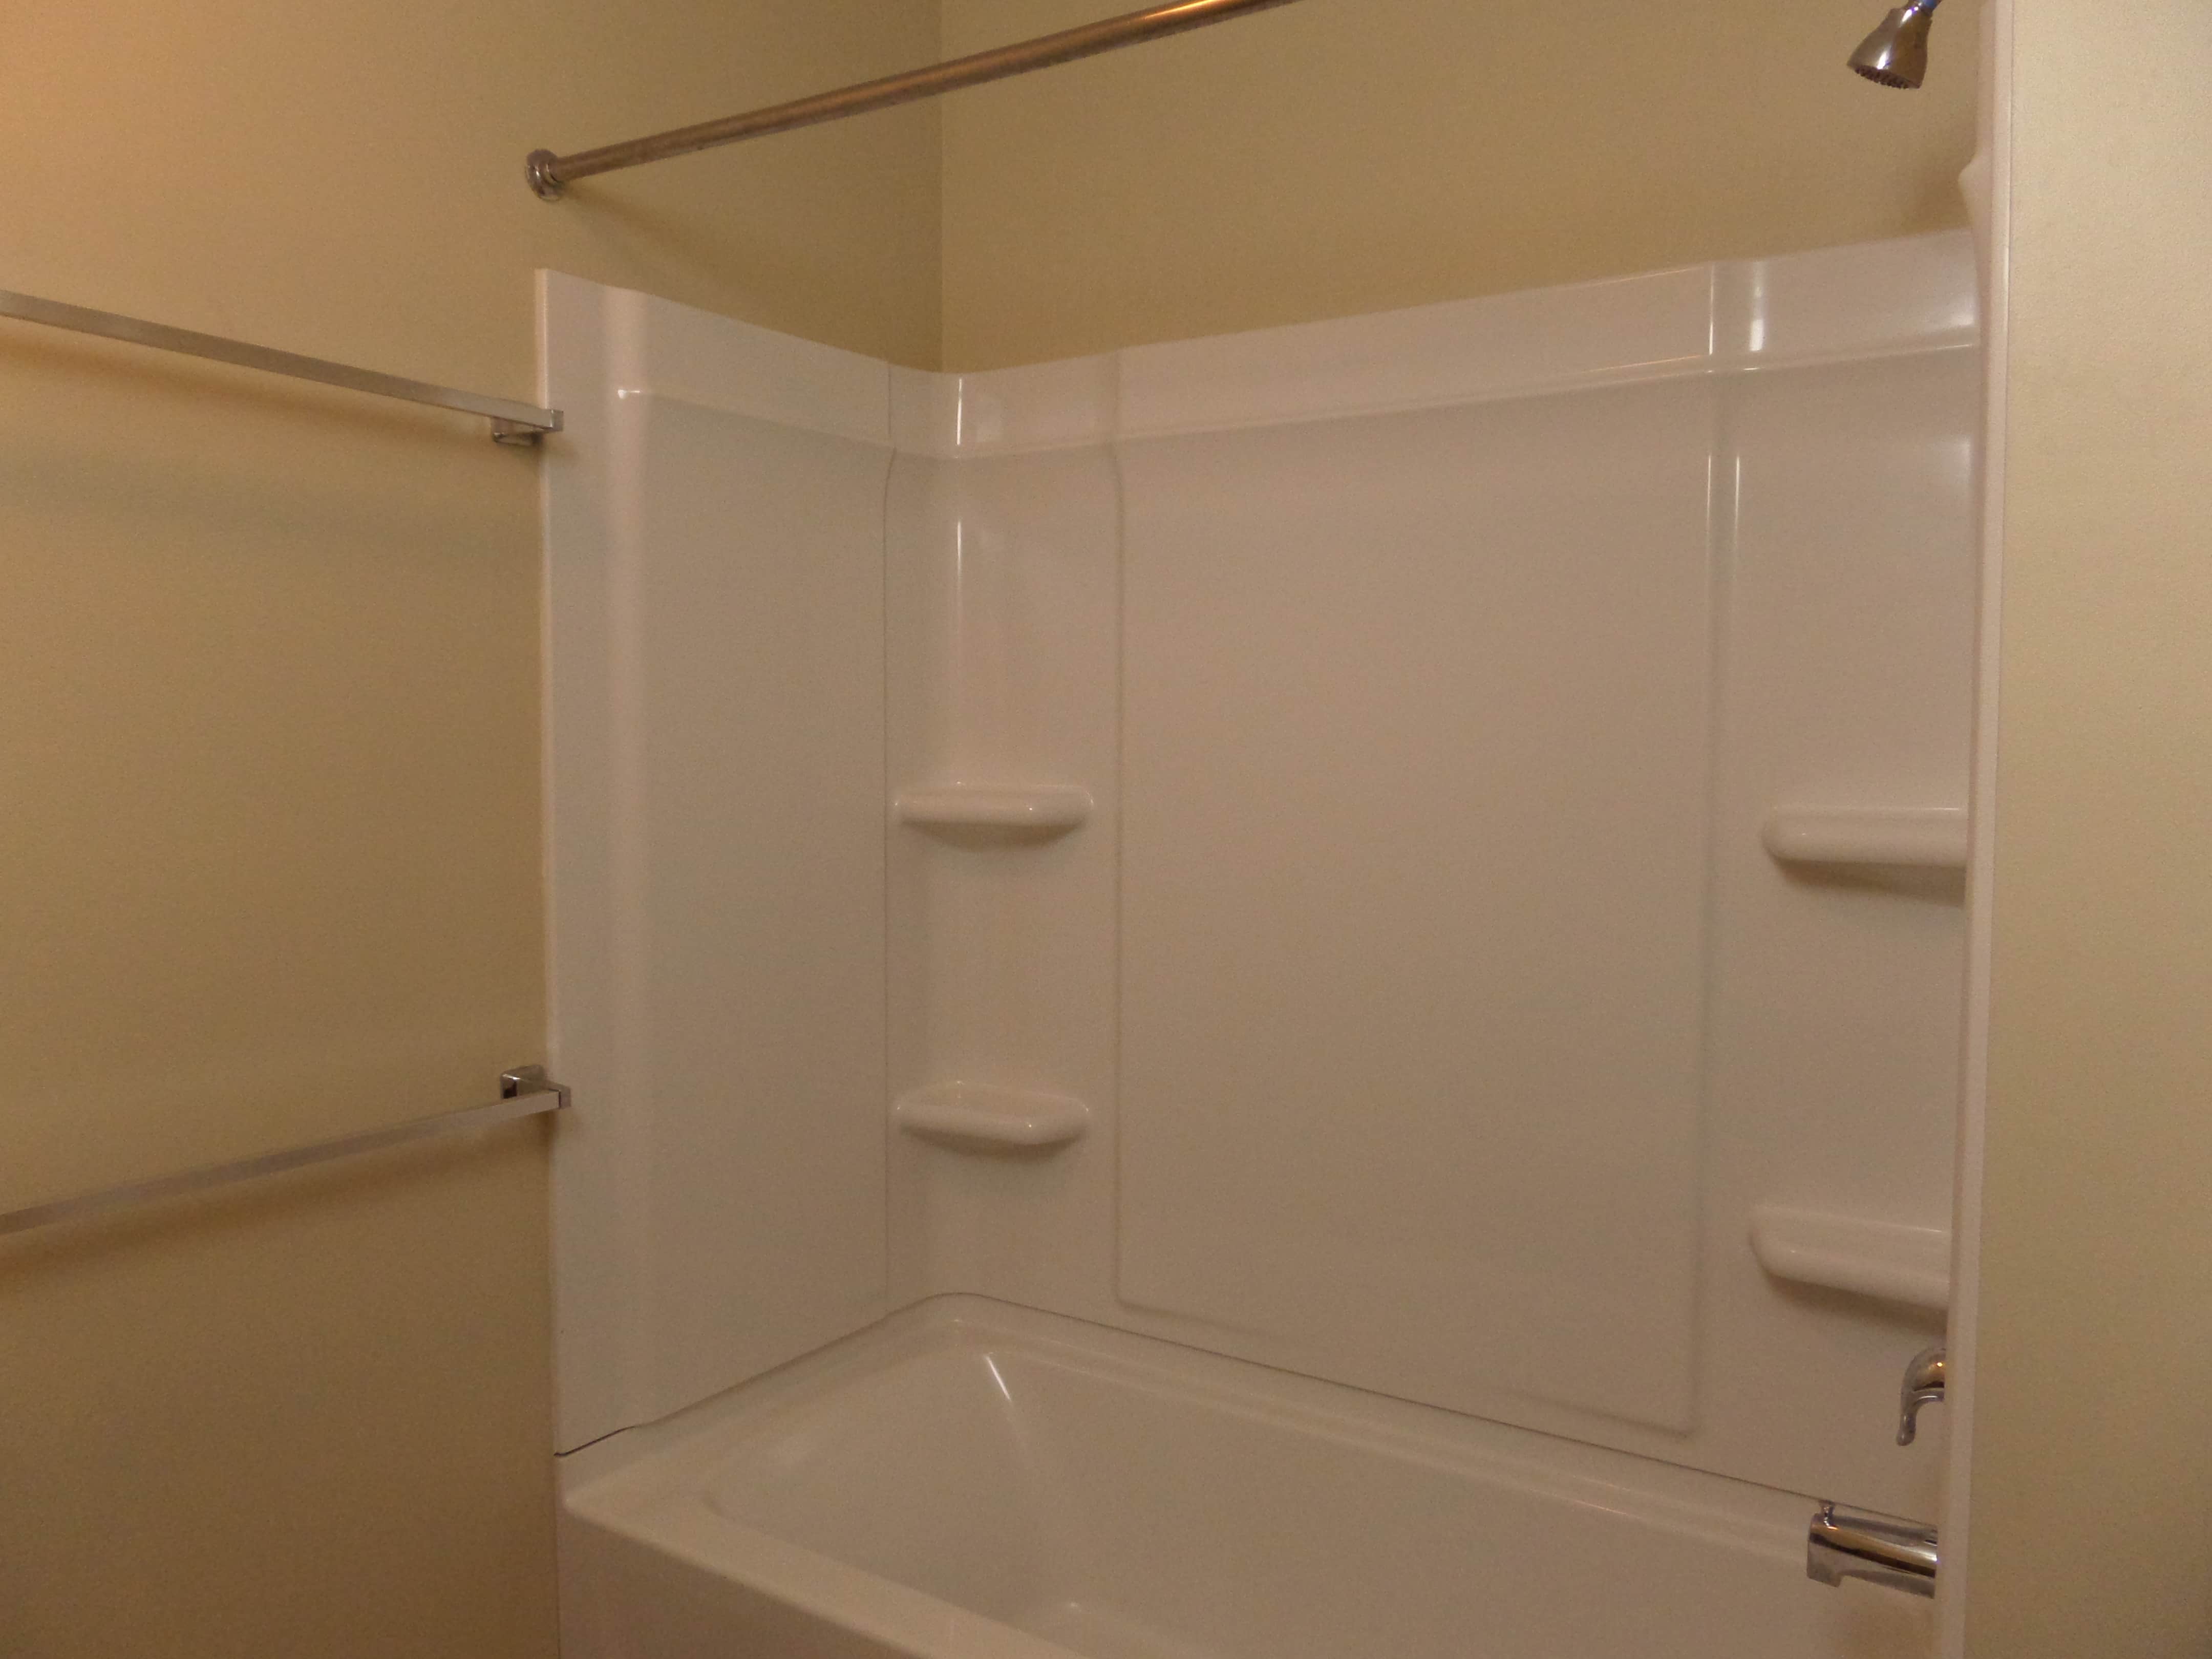 Shared bathroom has towel rails and bath shelves